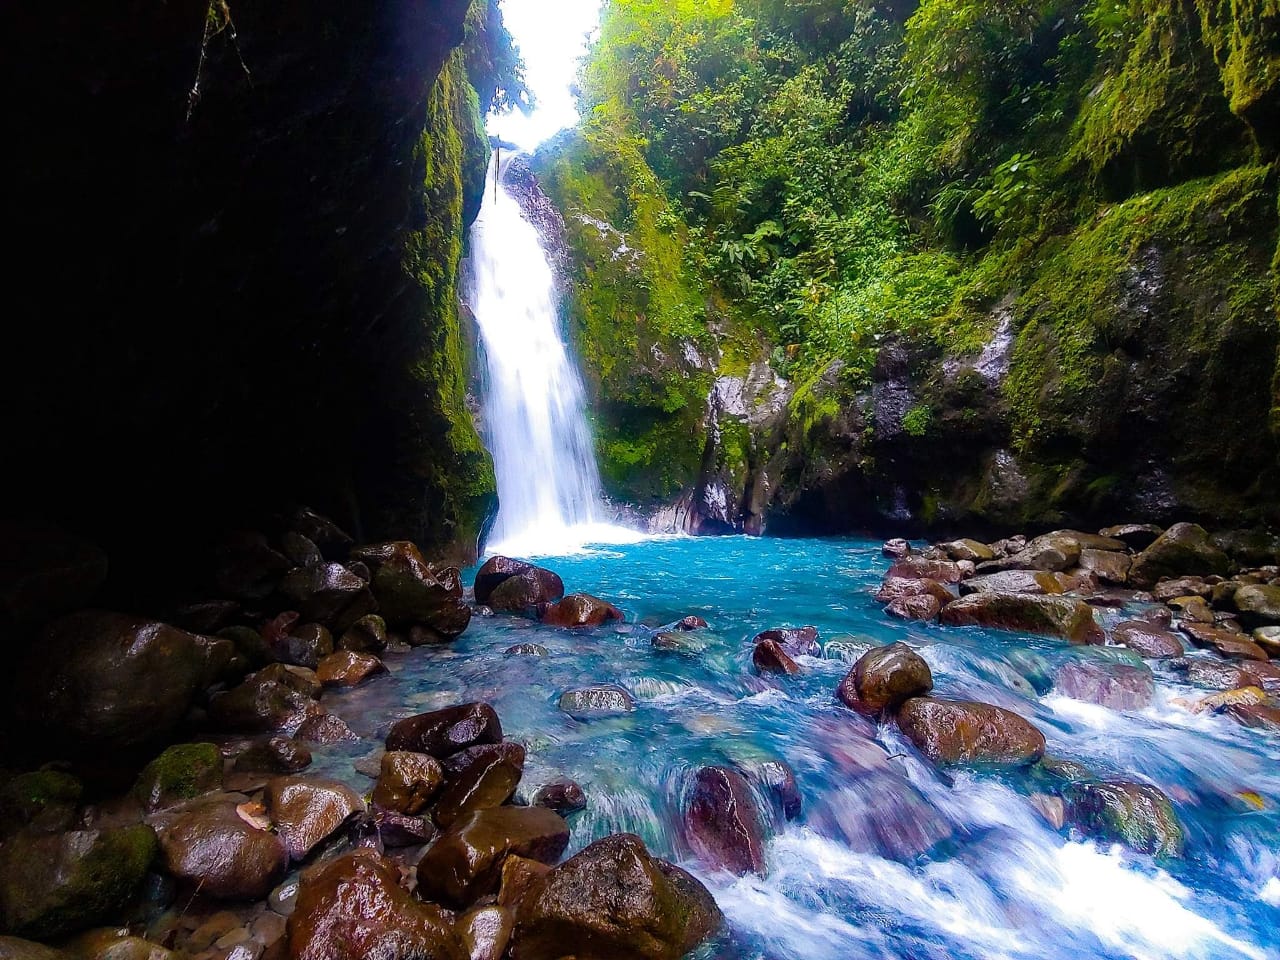 La Gemela left - Blue Falls of Costa Rica